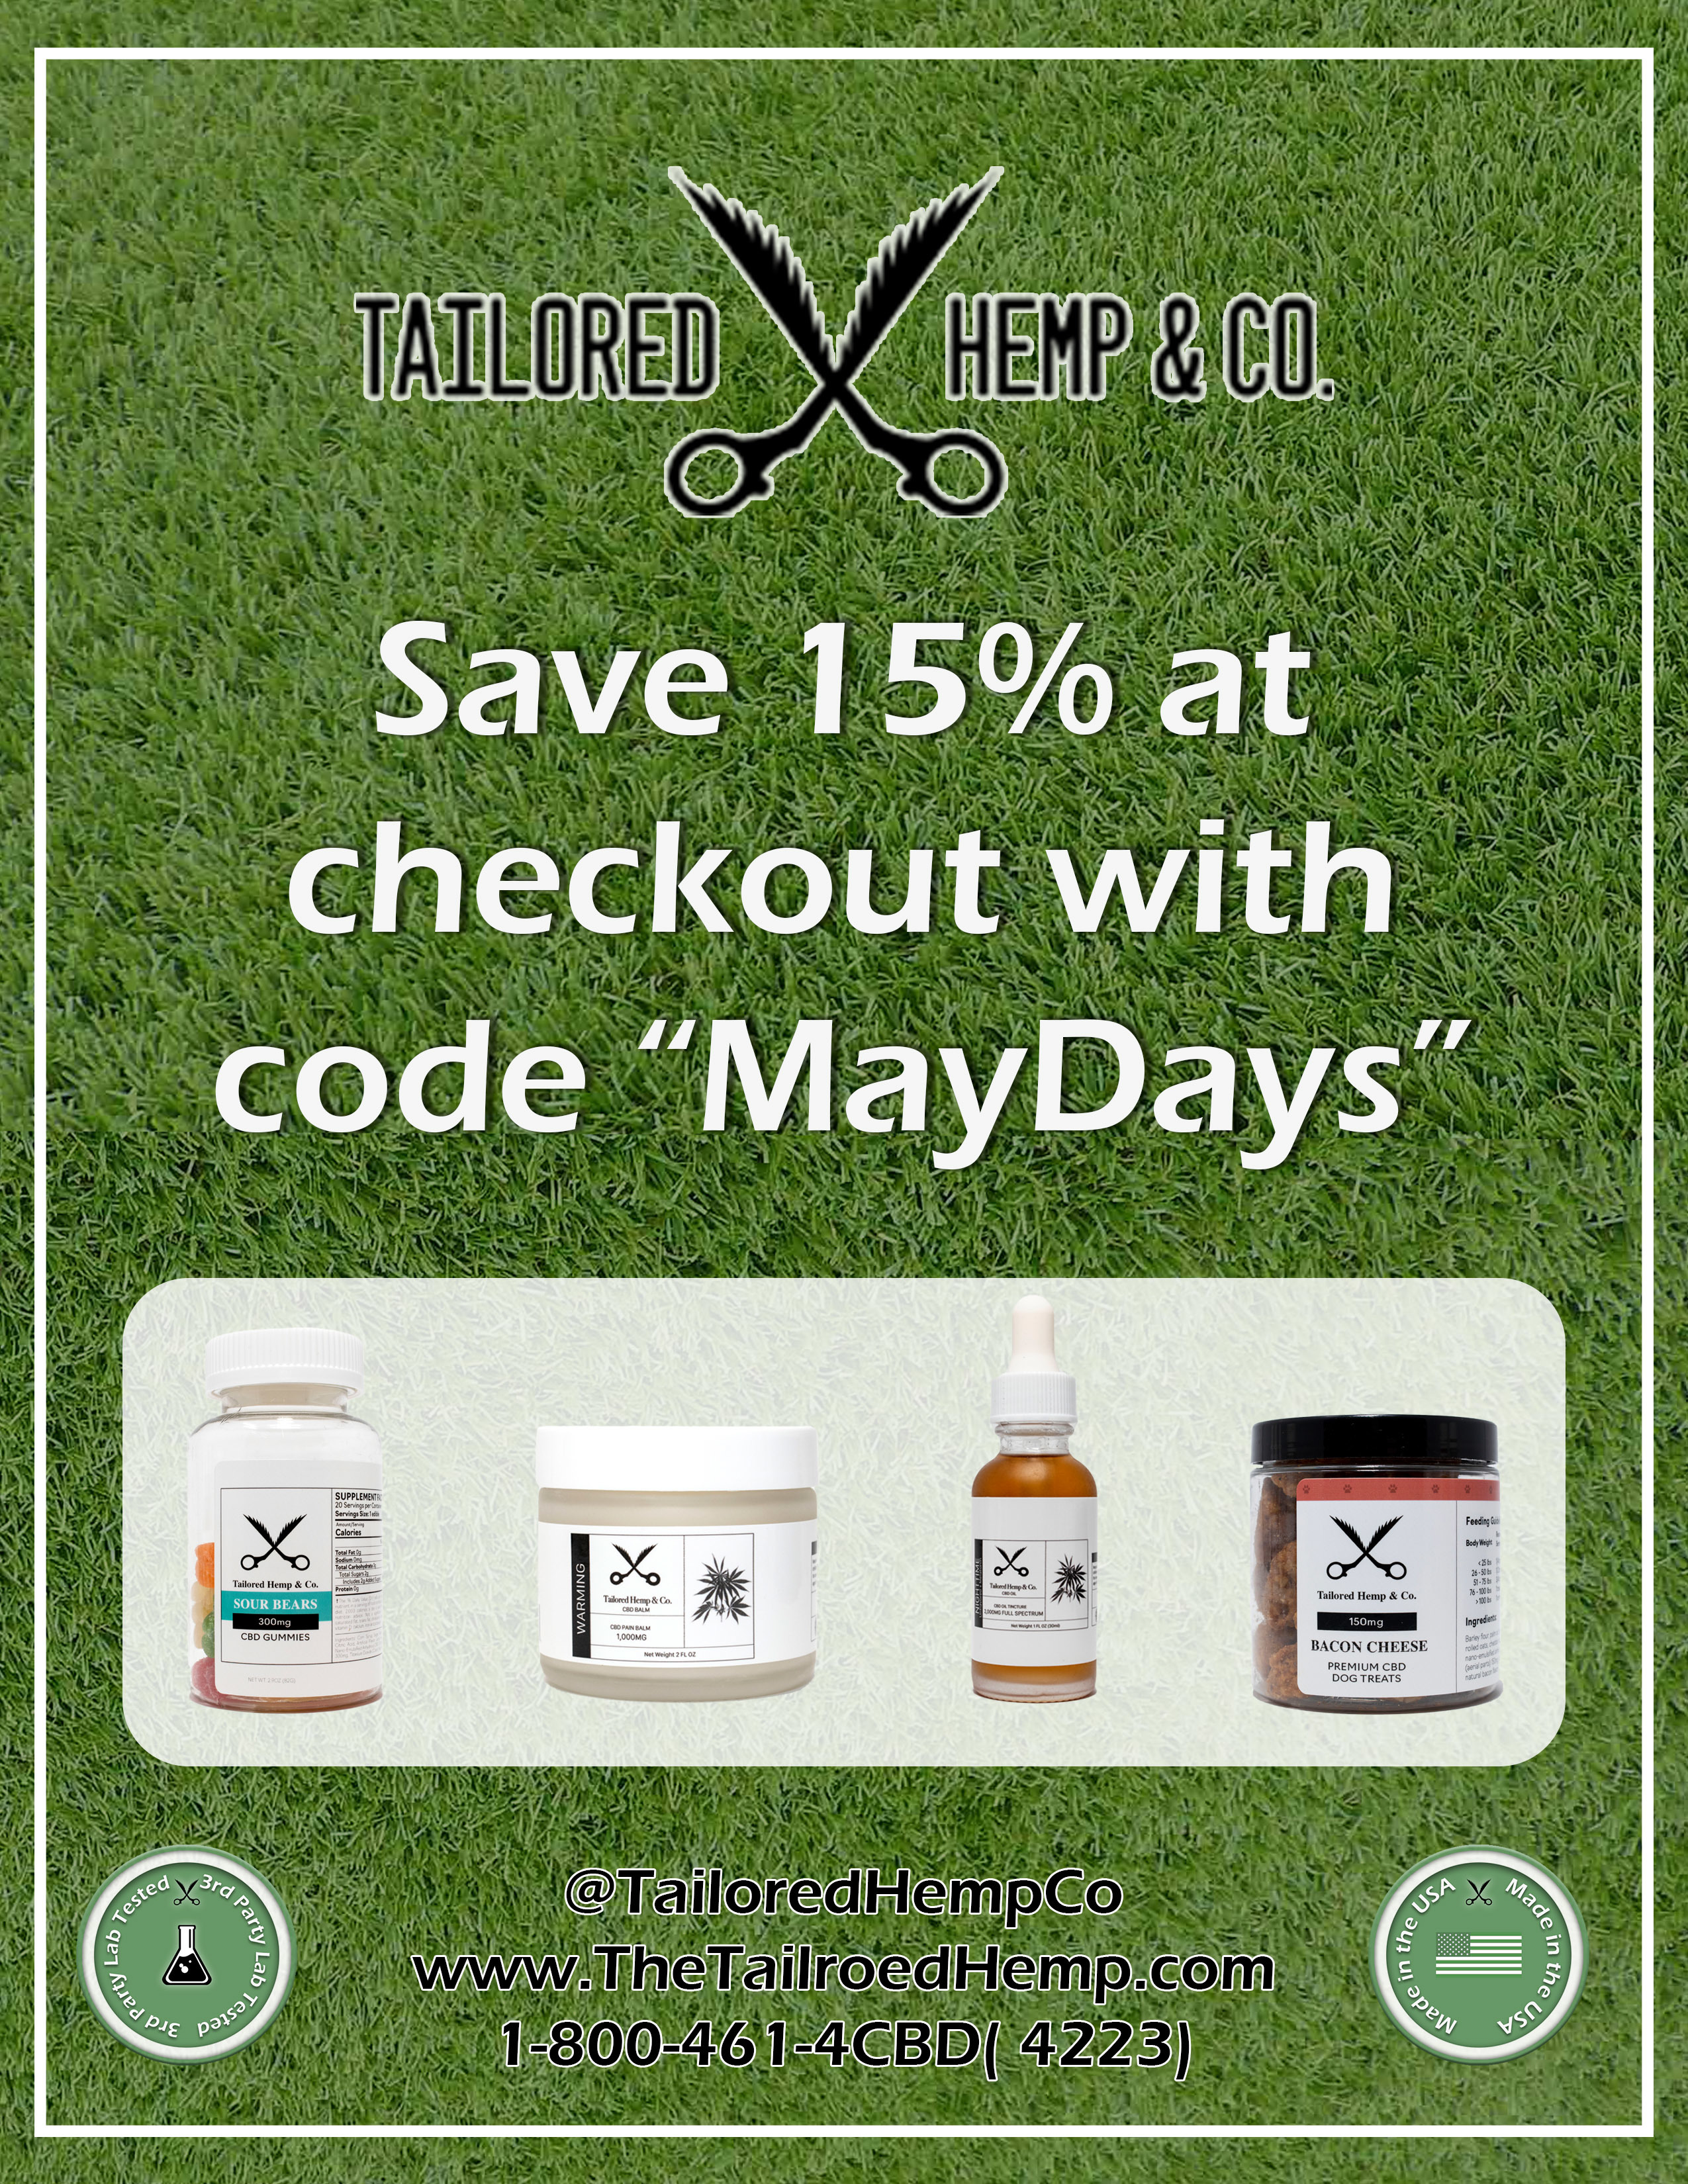 Enjoy "MAYDAYS" with Tailored Hemp & Co. High Quality CBD